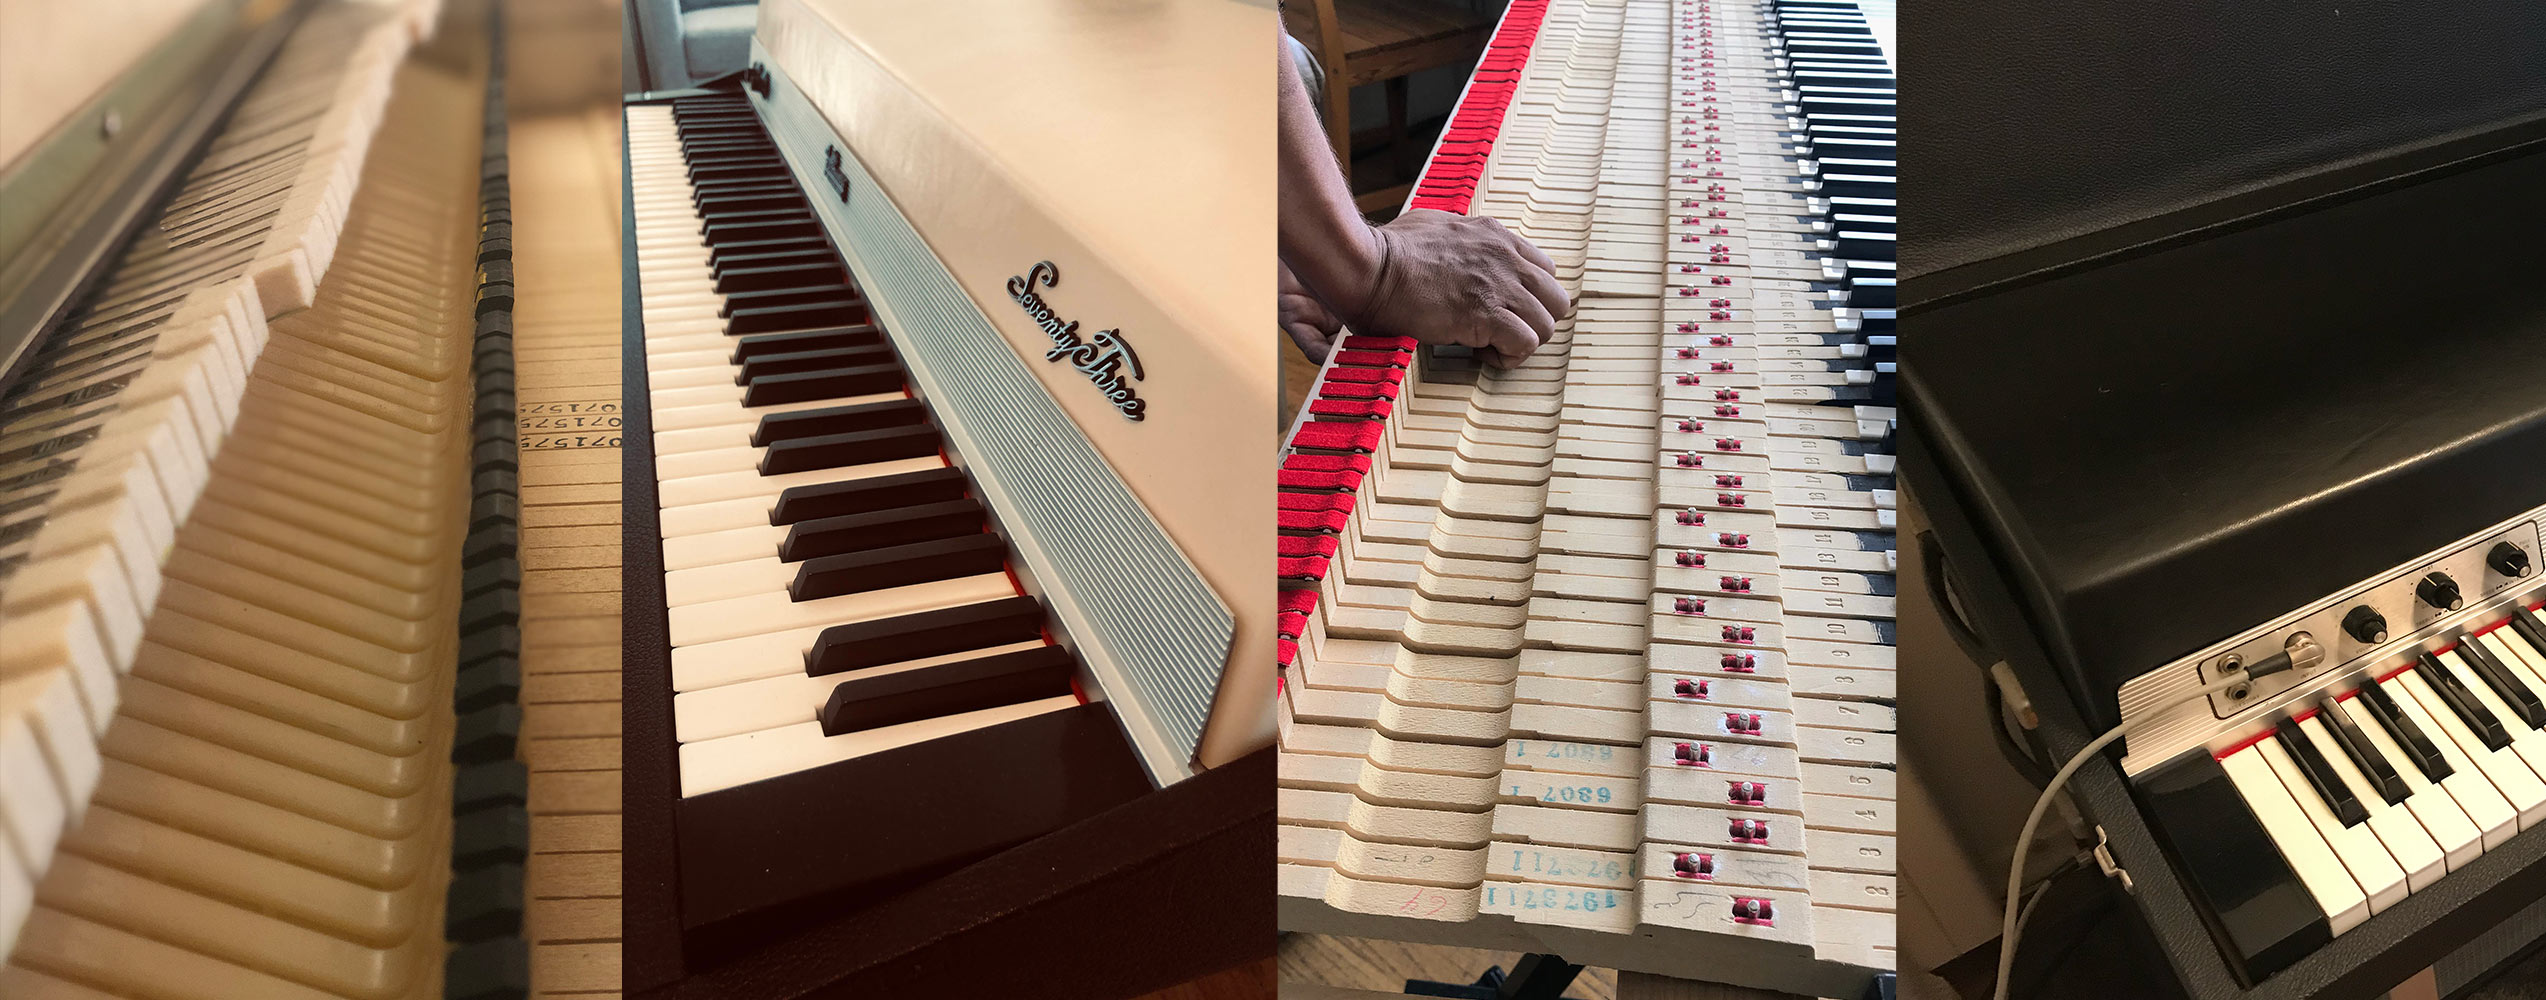 Rhodes piano repair and restoration